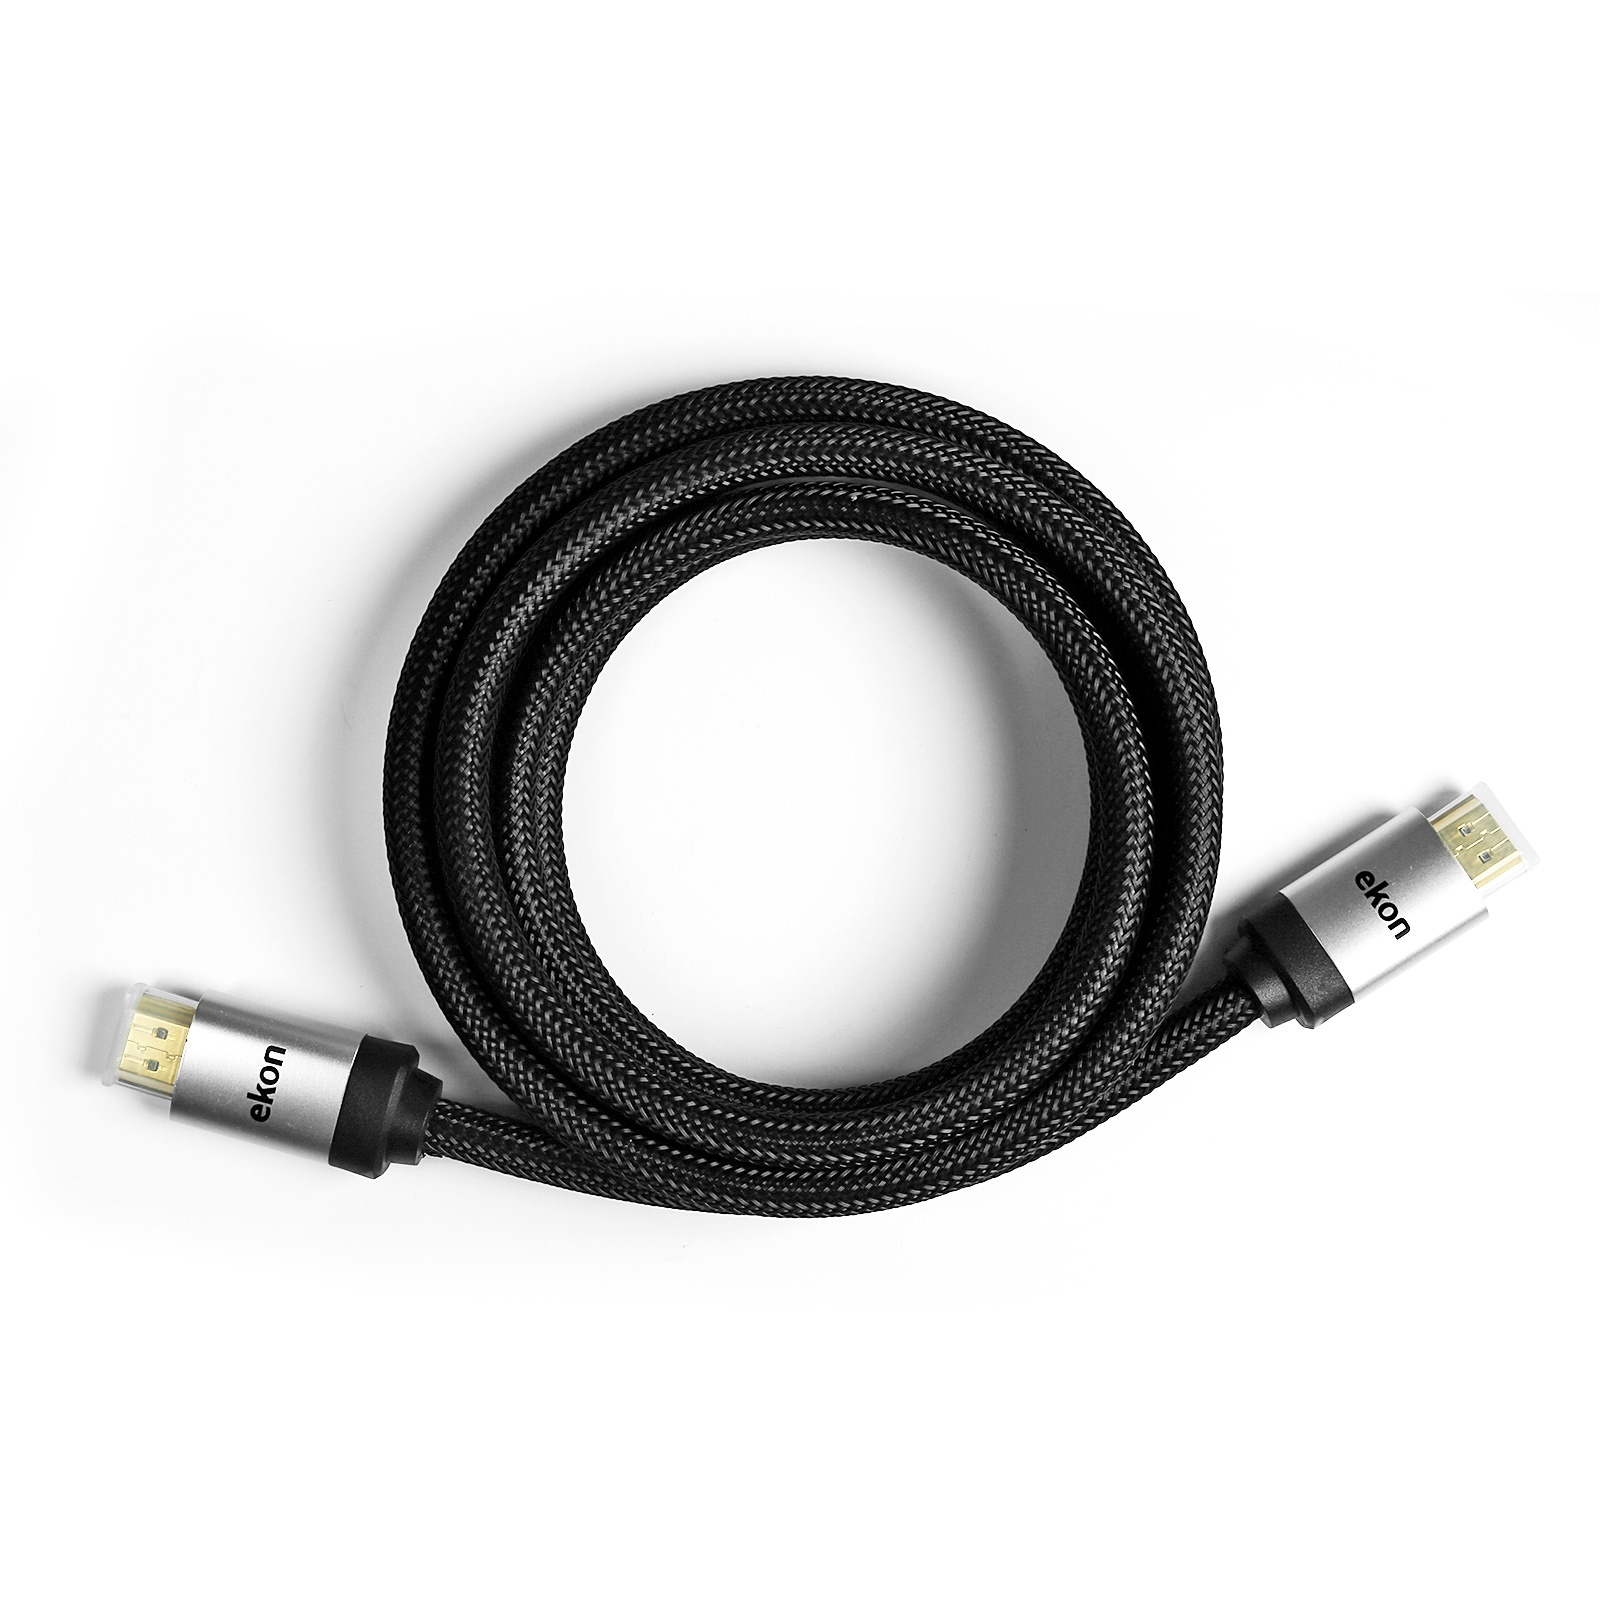 SBS Type - C 2.0 cable, 3 mt. lenght, black color